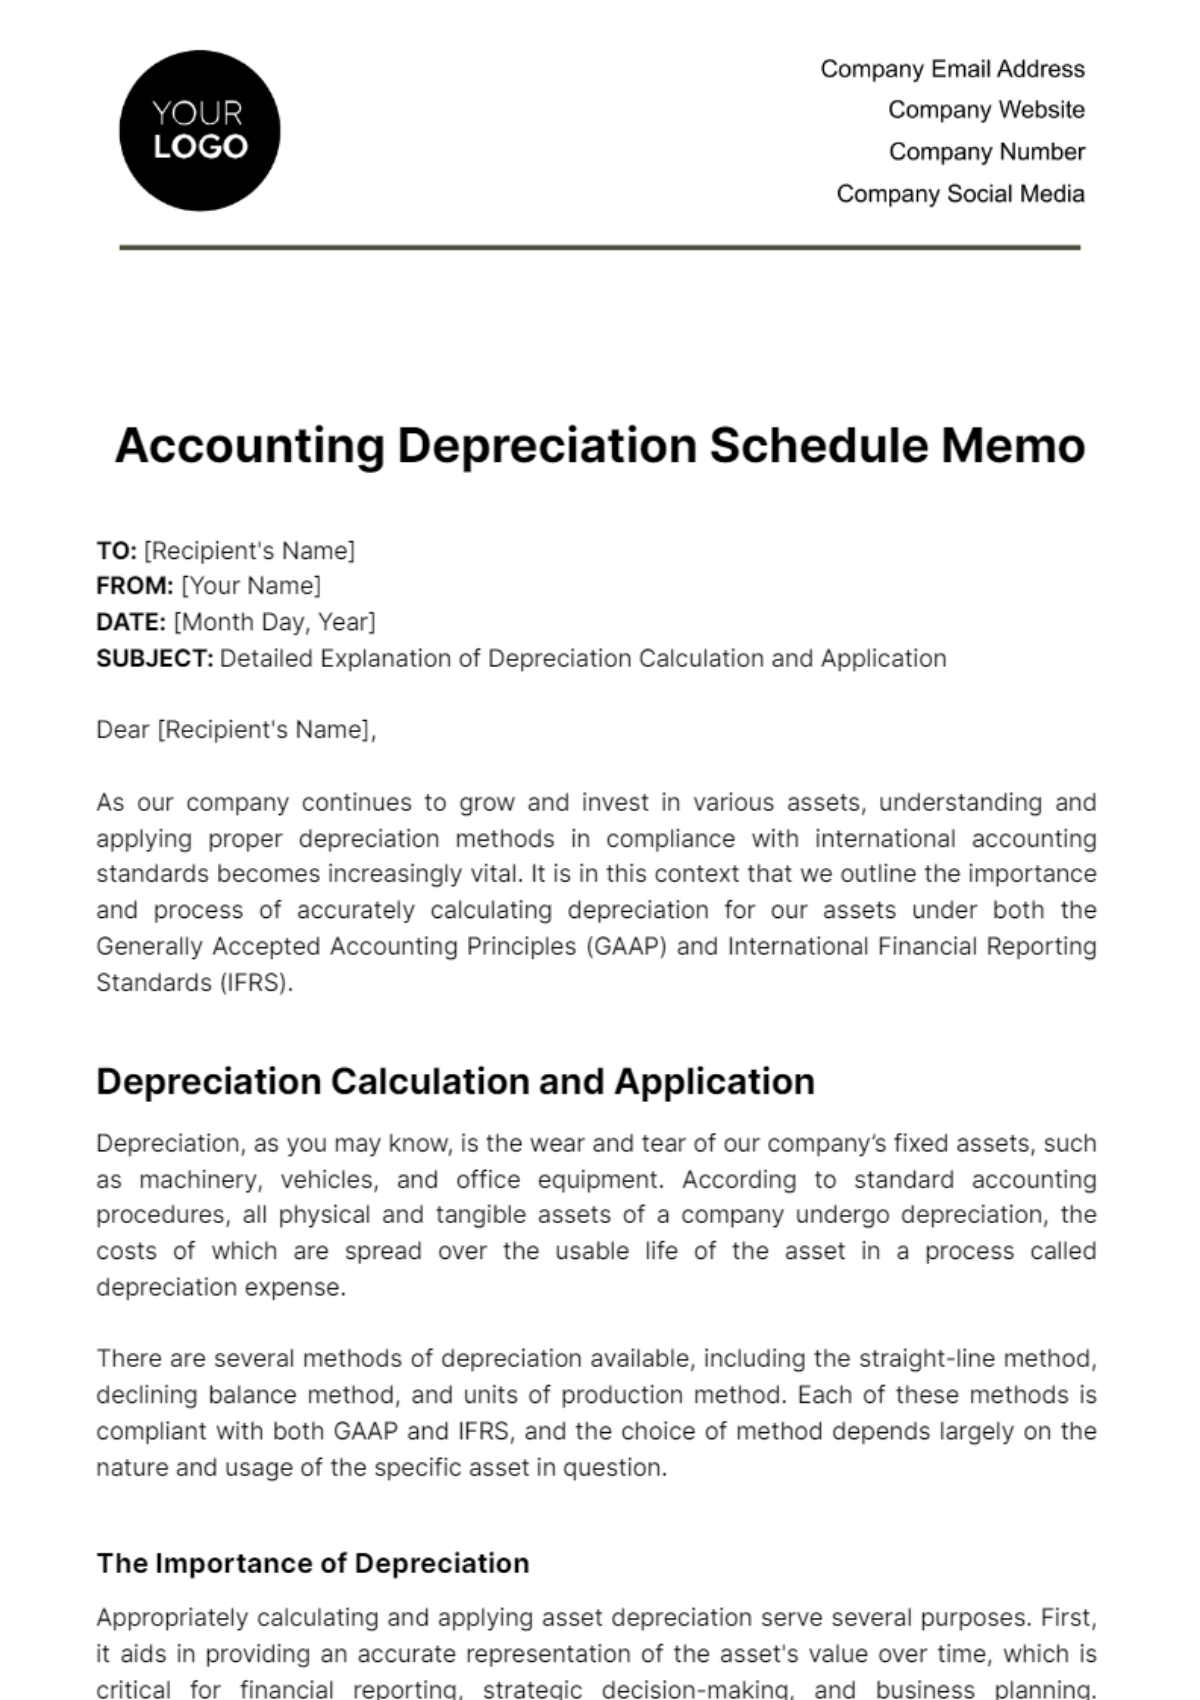 Accounting Depreciation Schedule Memo Template